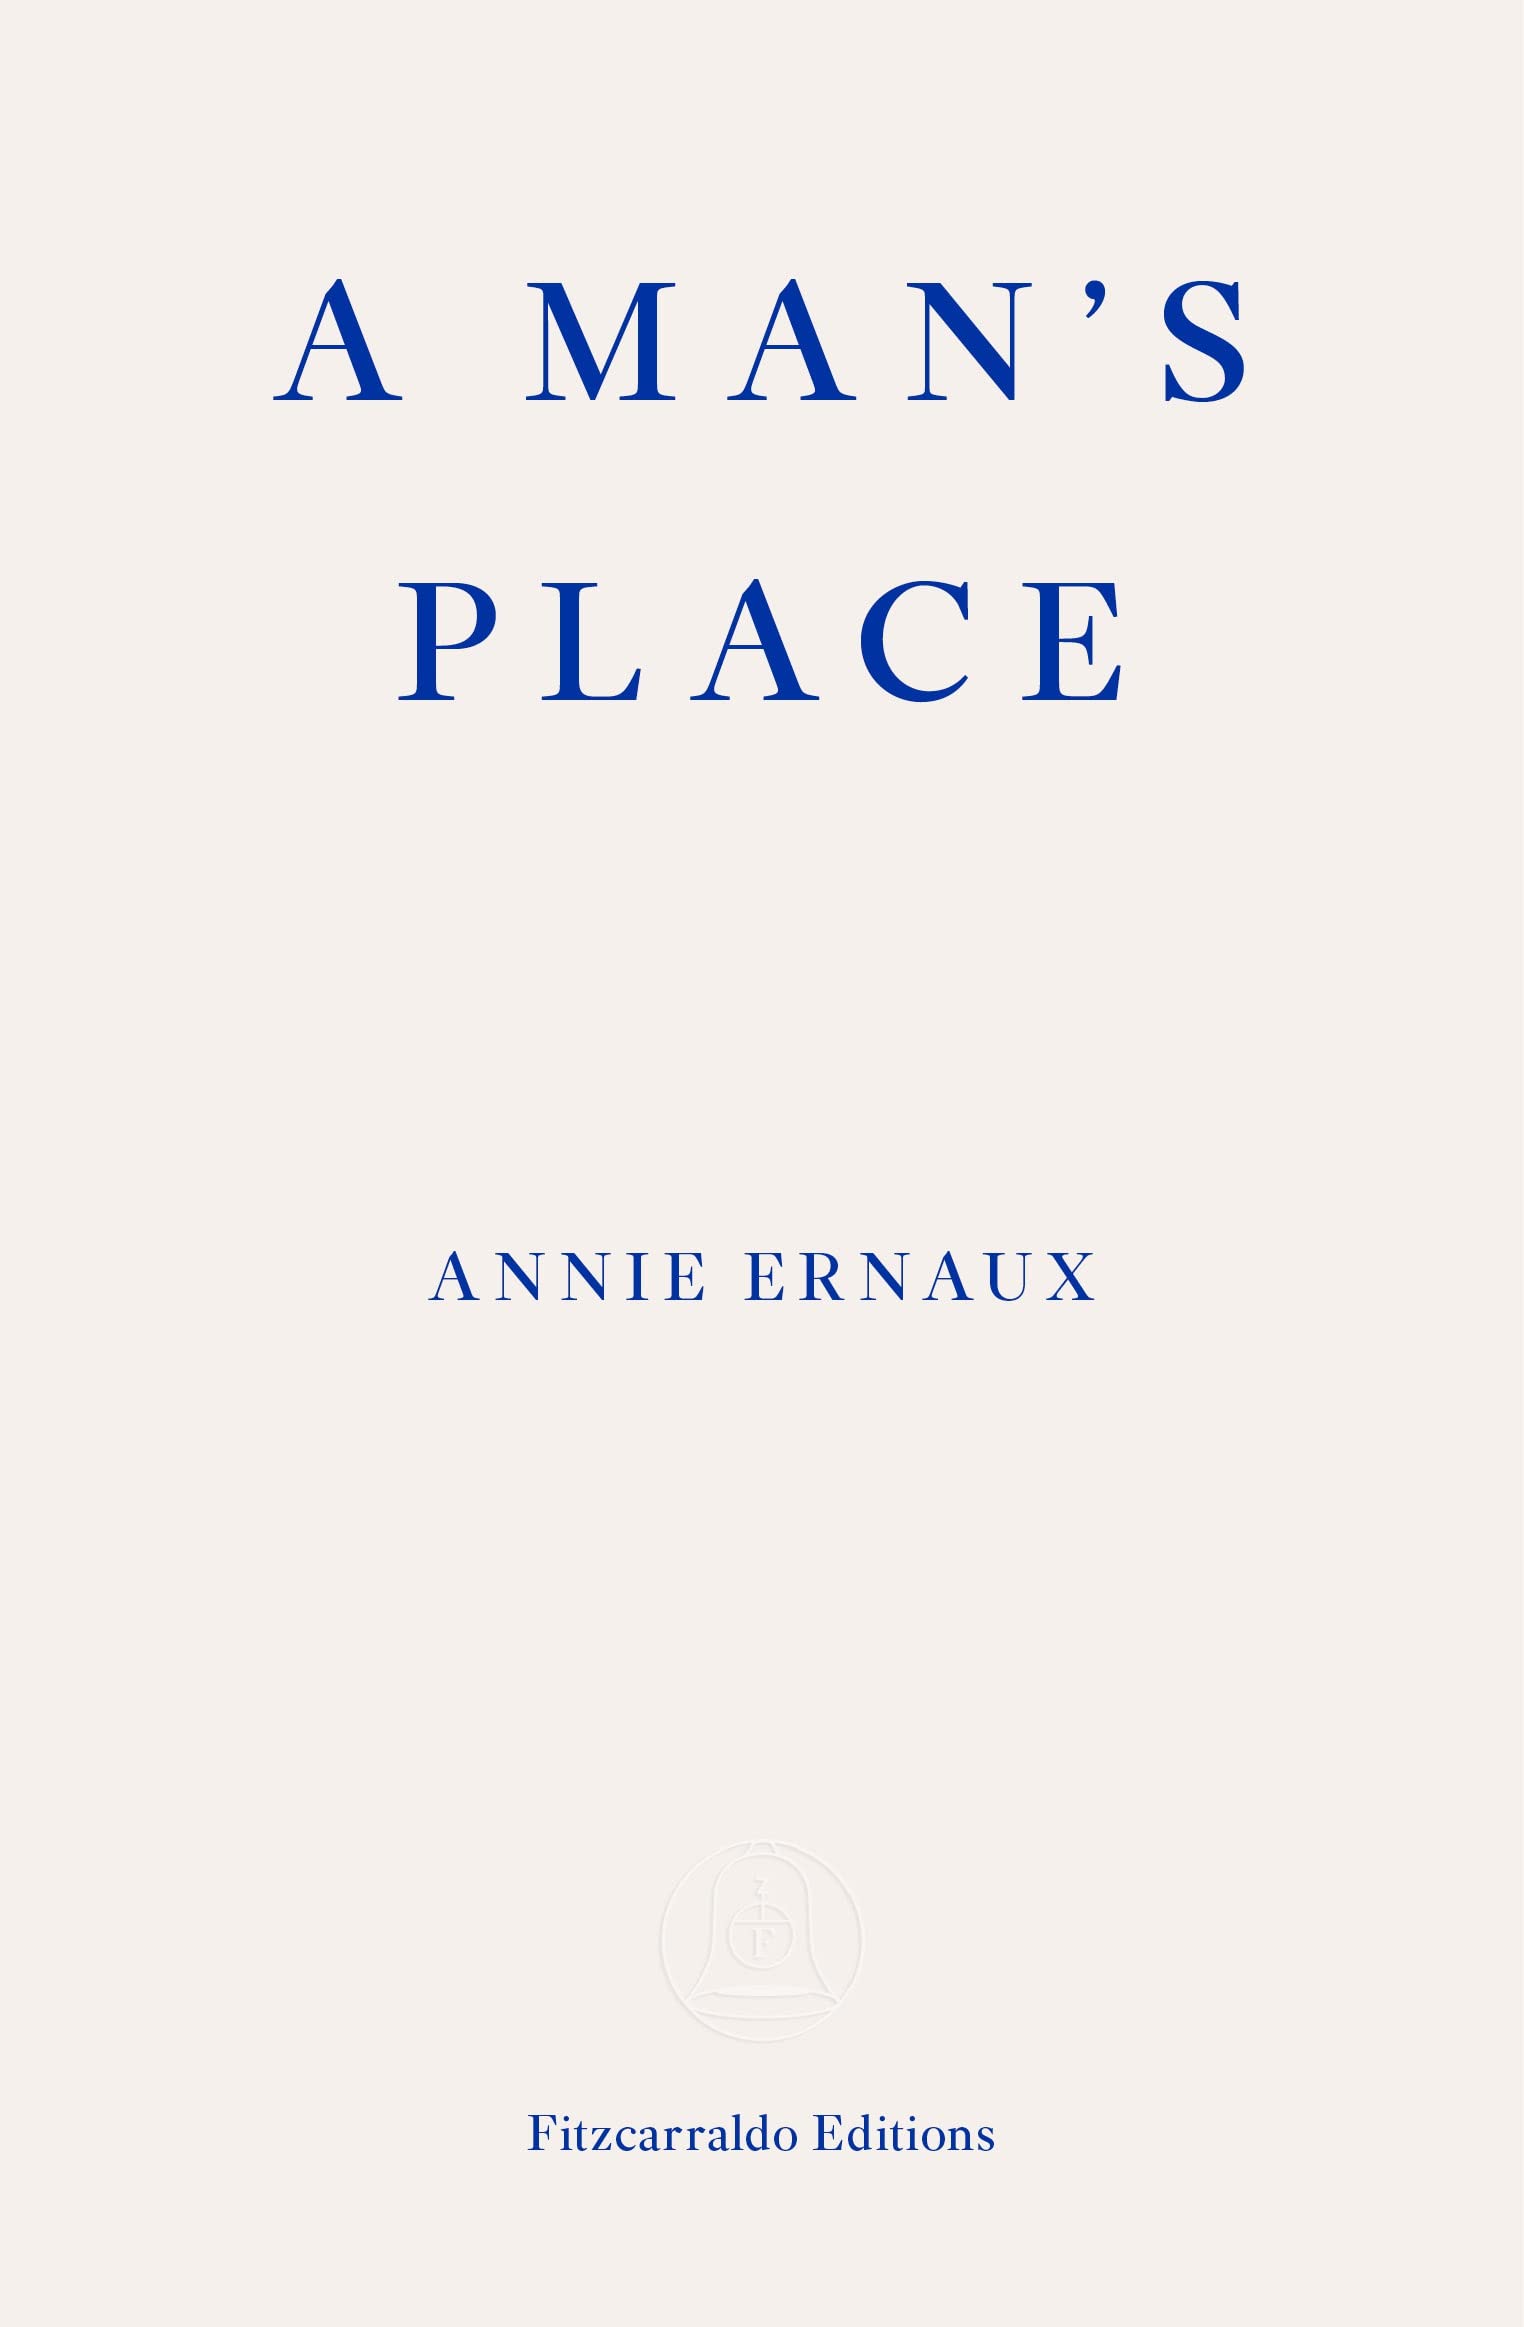 Annie Ernaux: Man's Place (2020, Fitzcarraldo Editions)